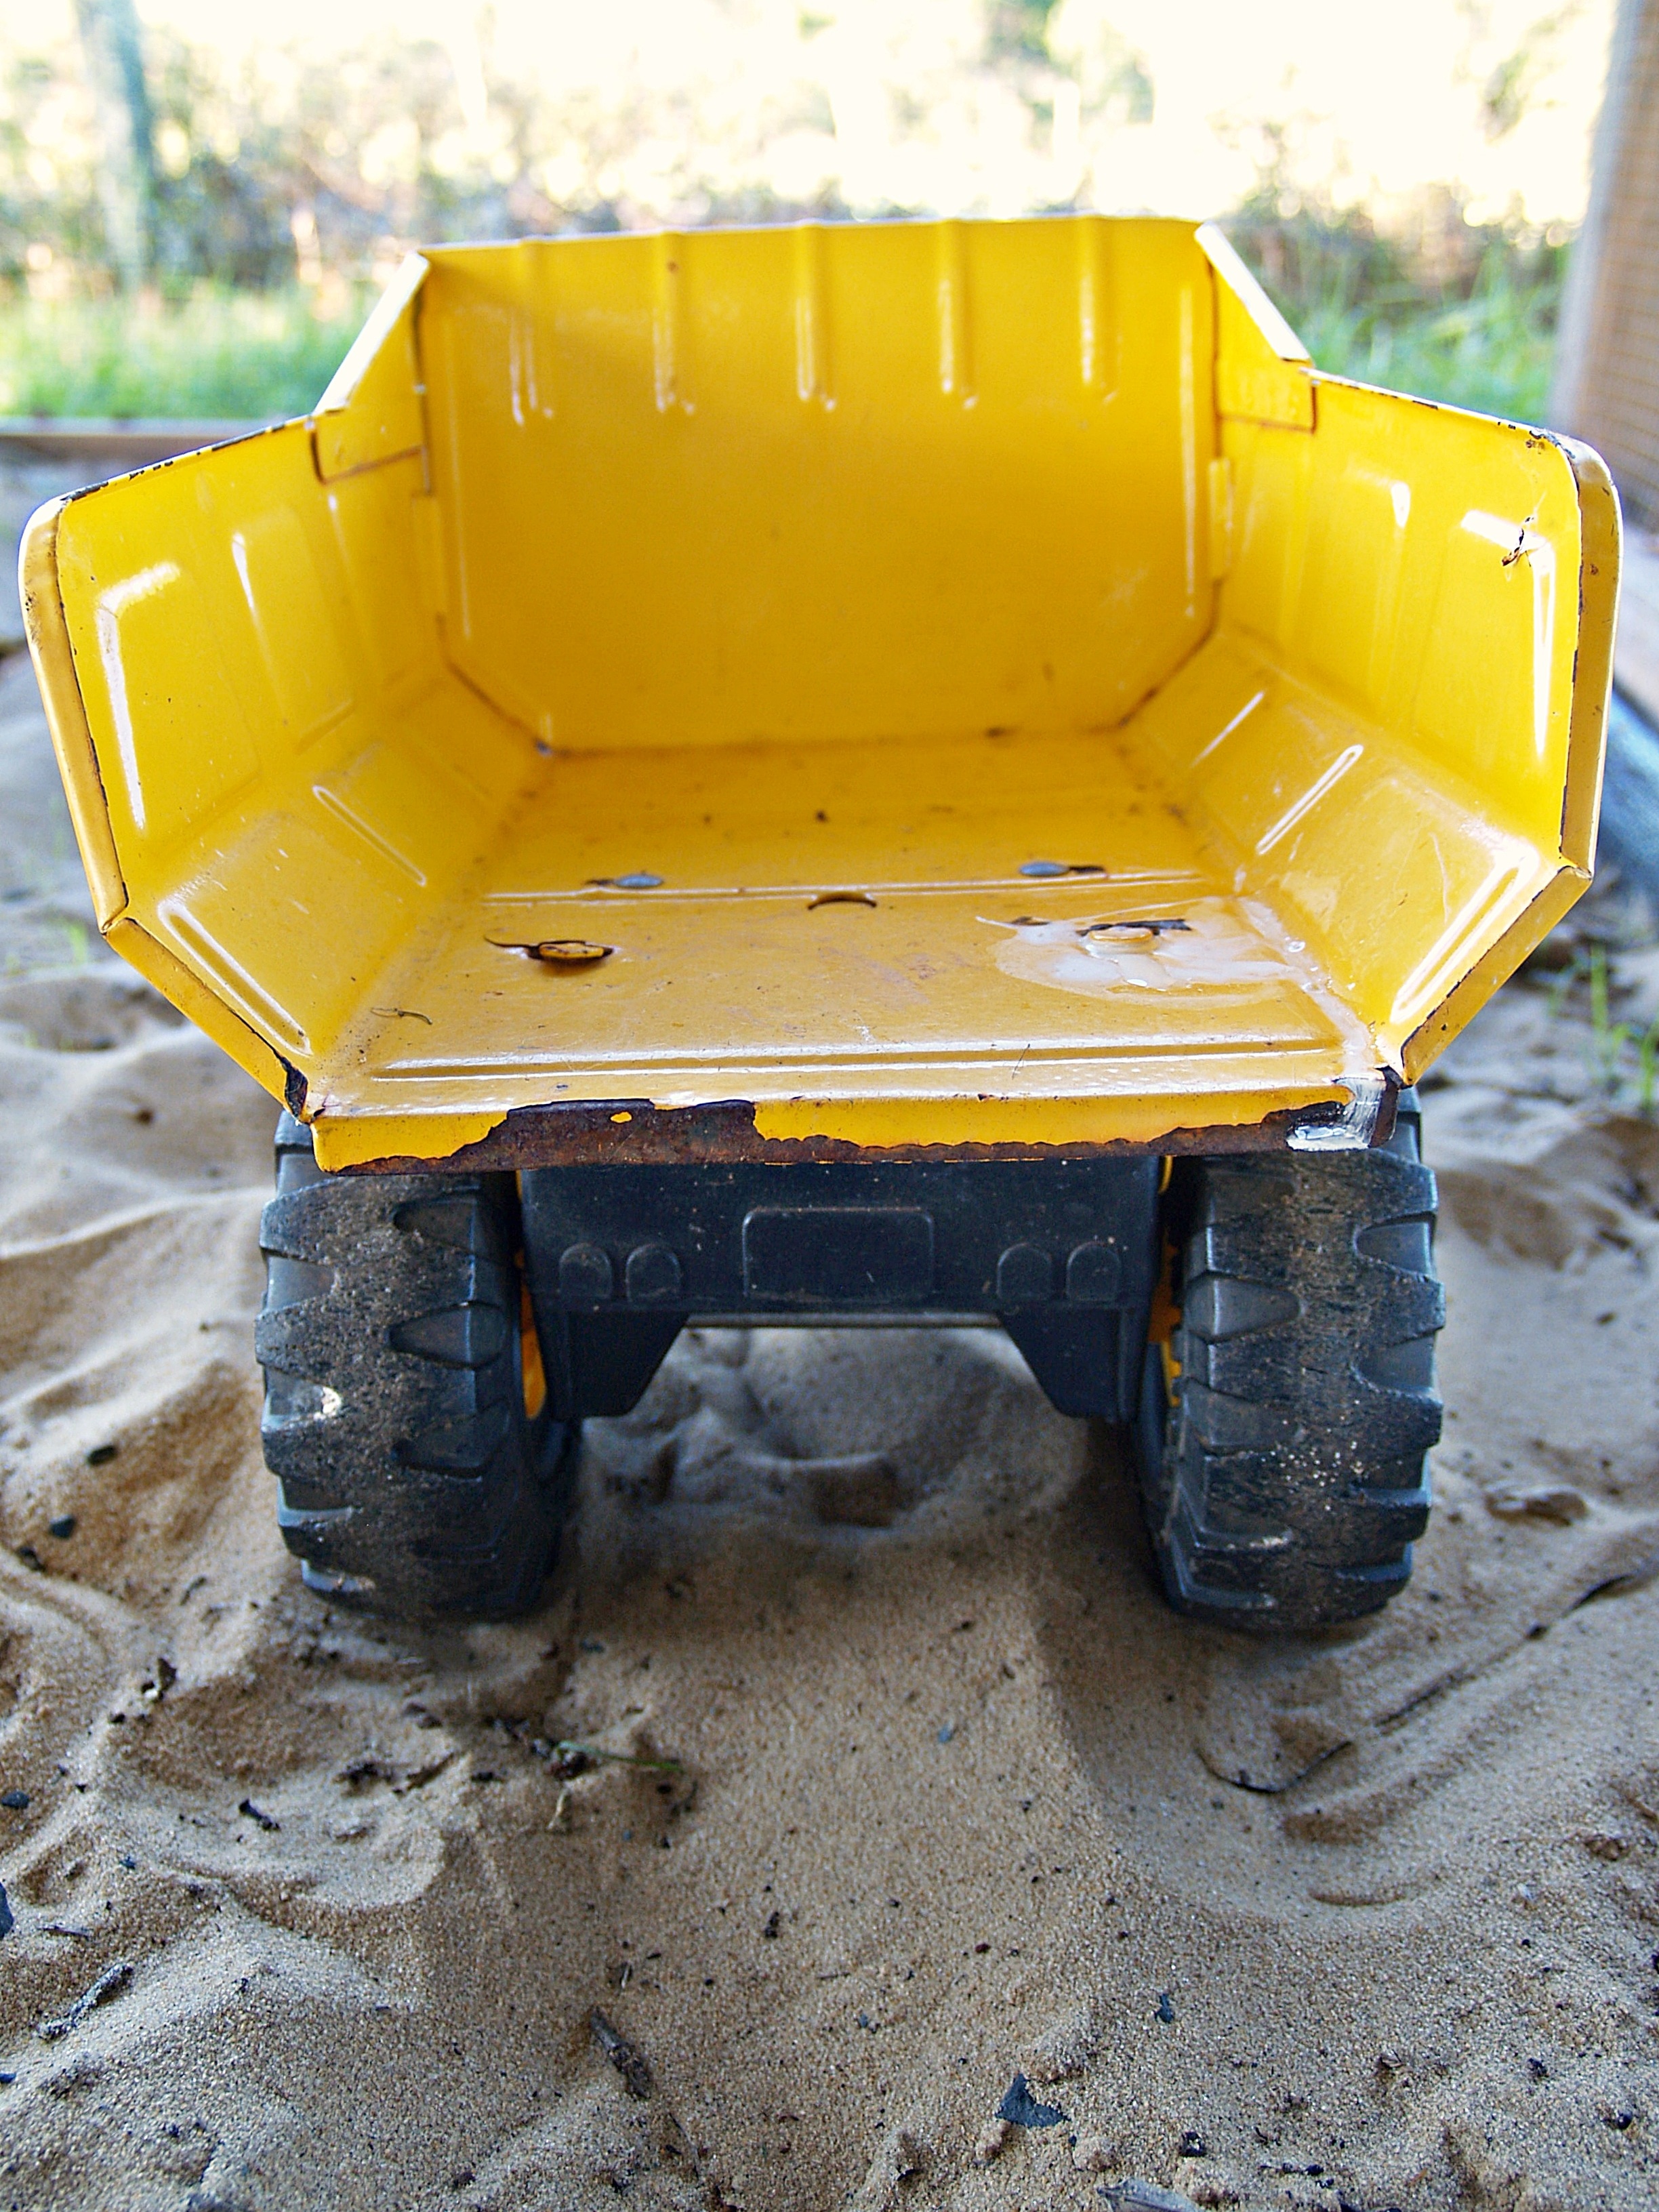 yellow dumptruck toy